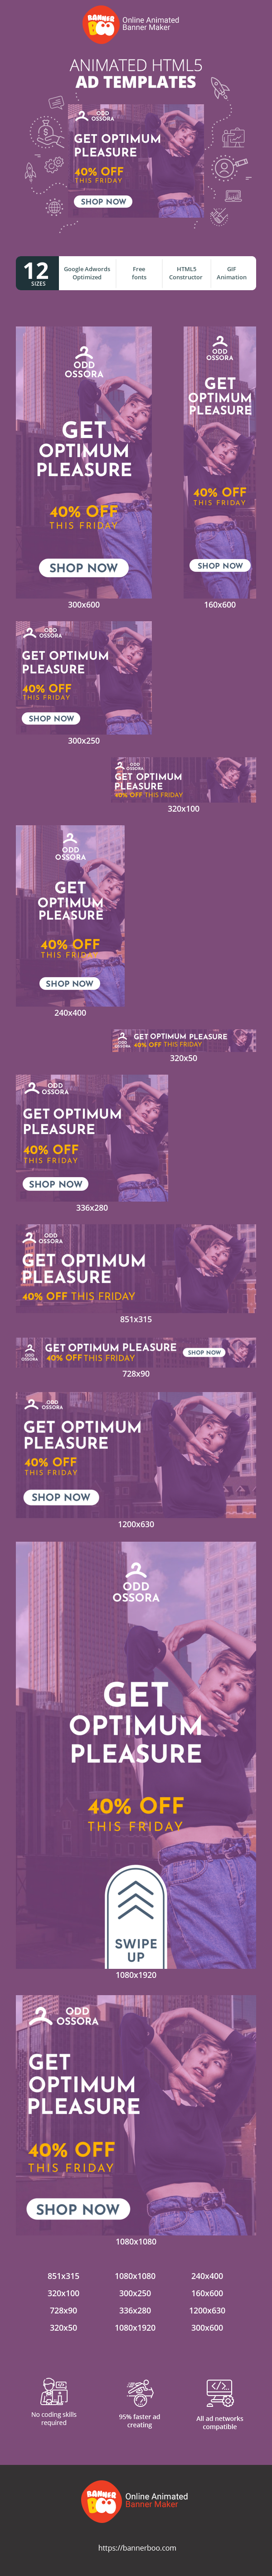 Banner ad template — Get Optimum Pleasure — 40% Off This Friday